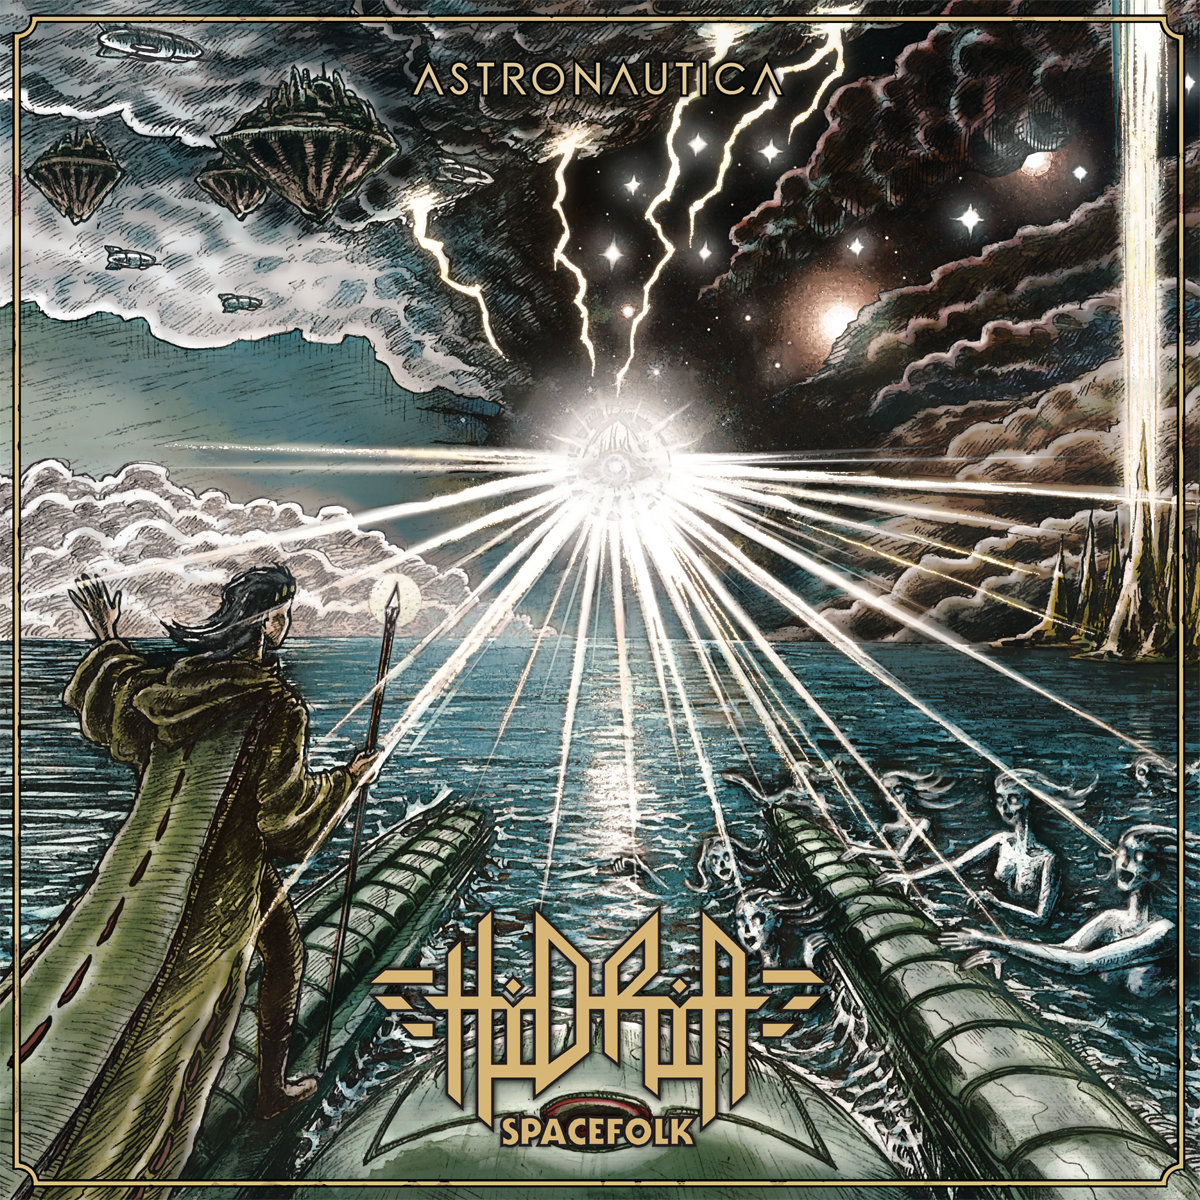 Hidria Spacefolk - Cycloop @ 'Astronautica' album (alternative, astrobeat)